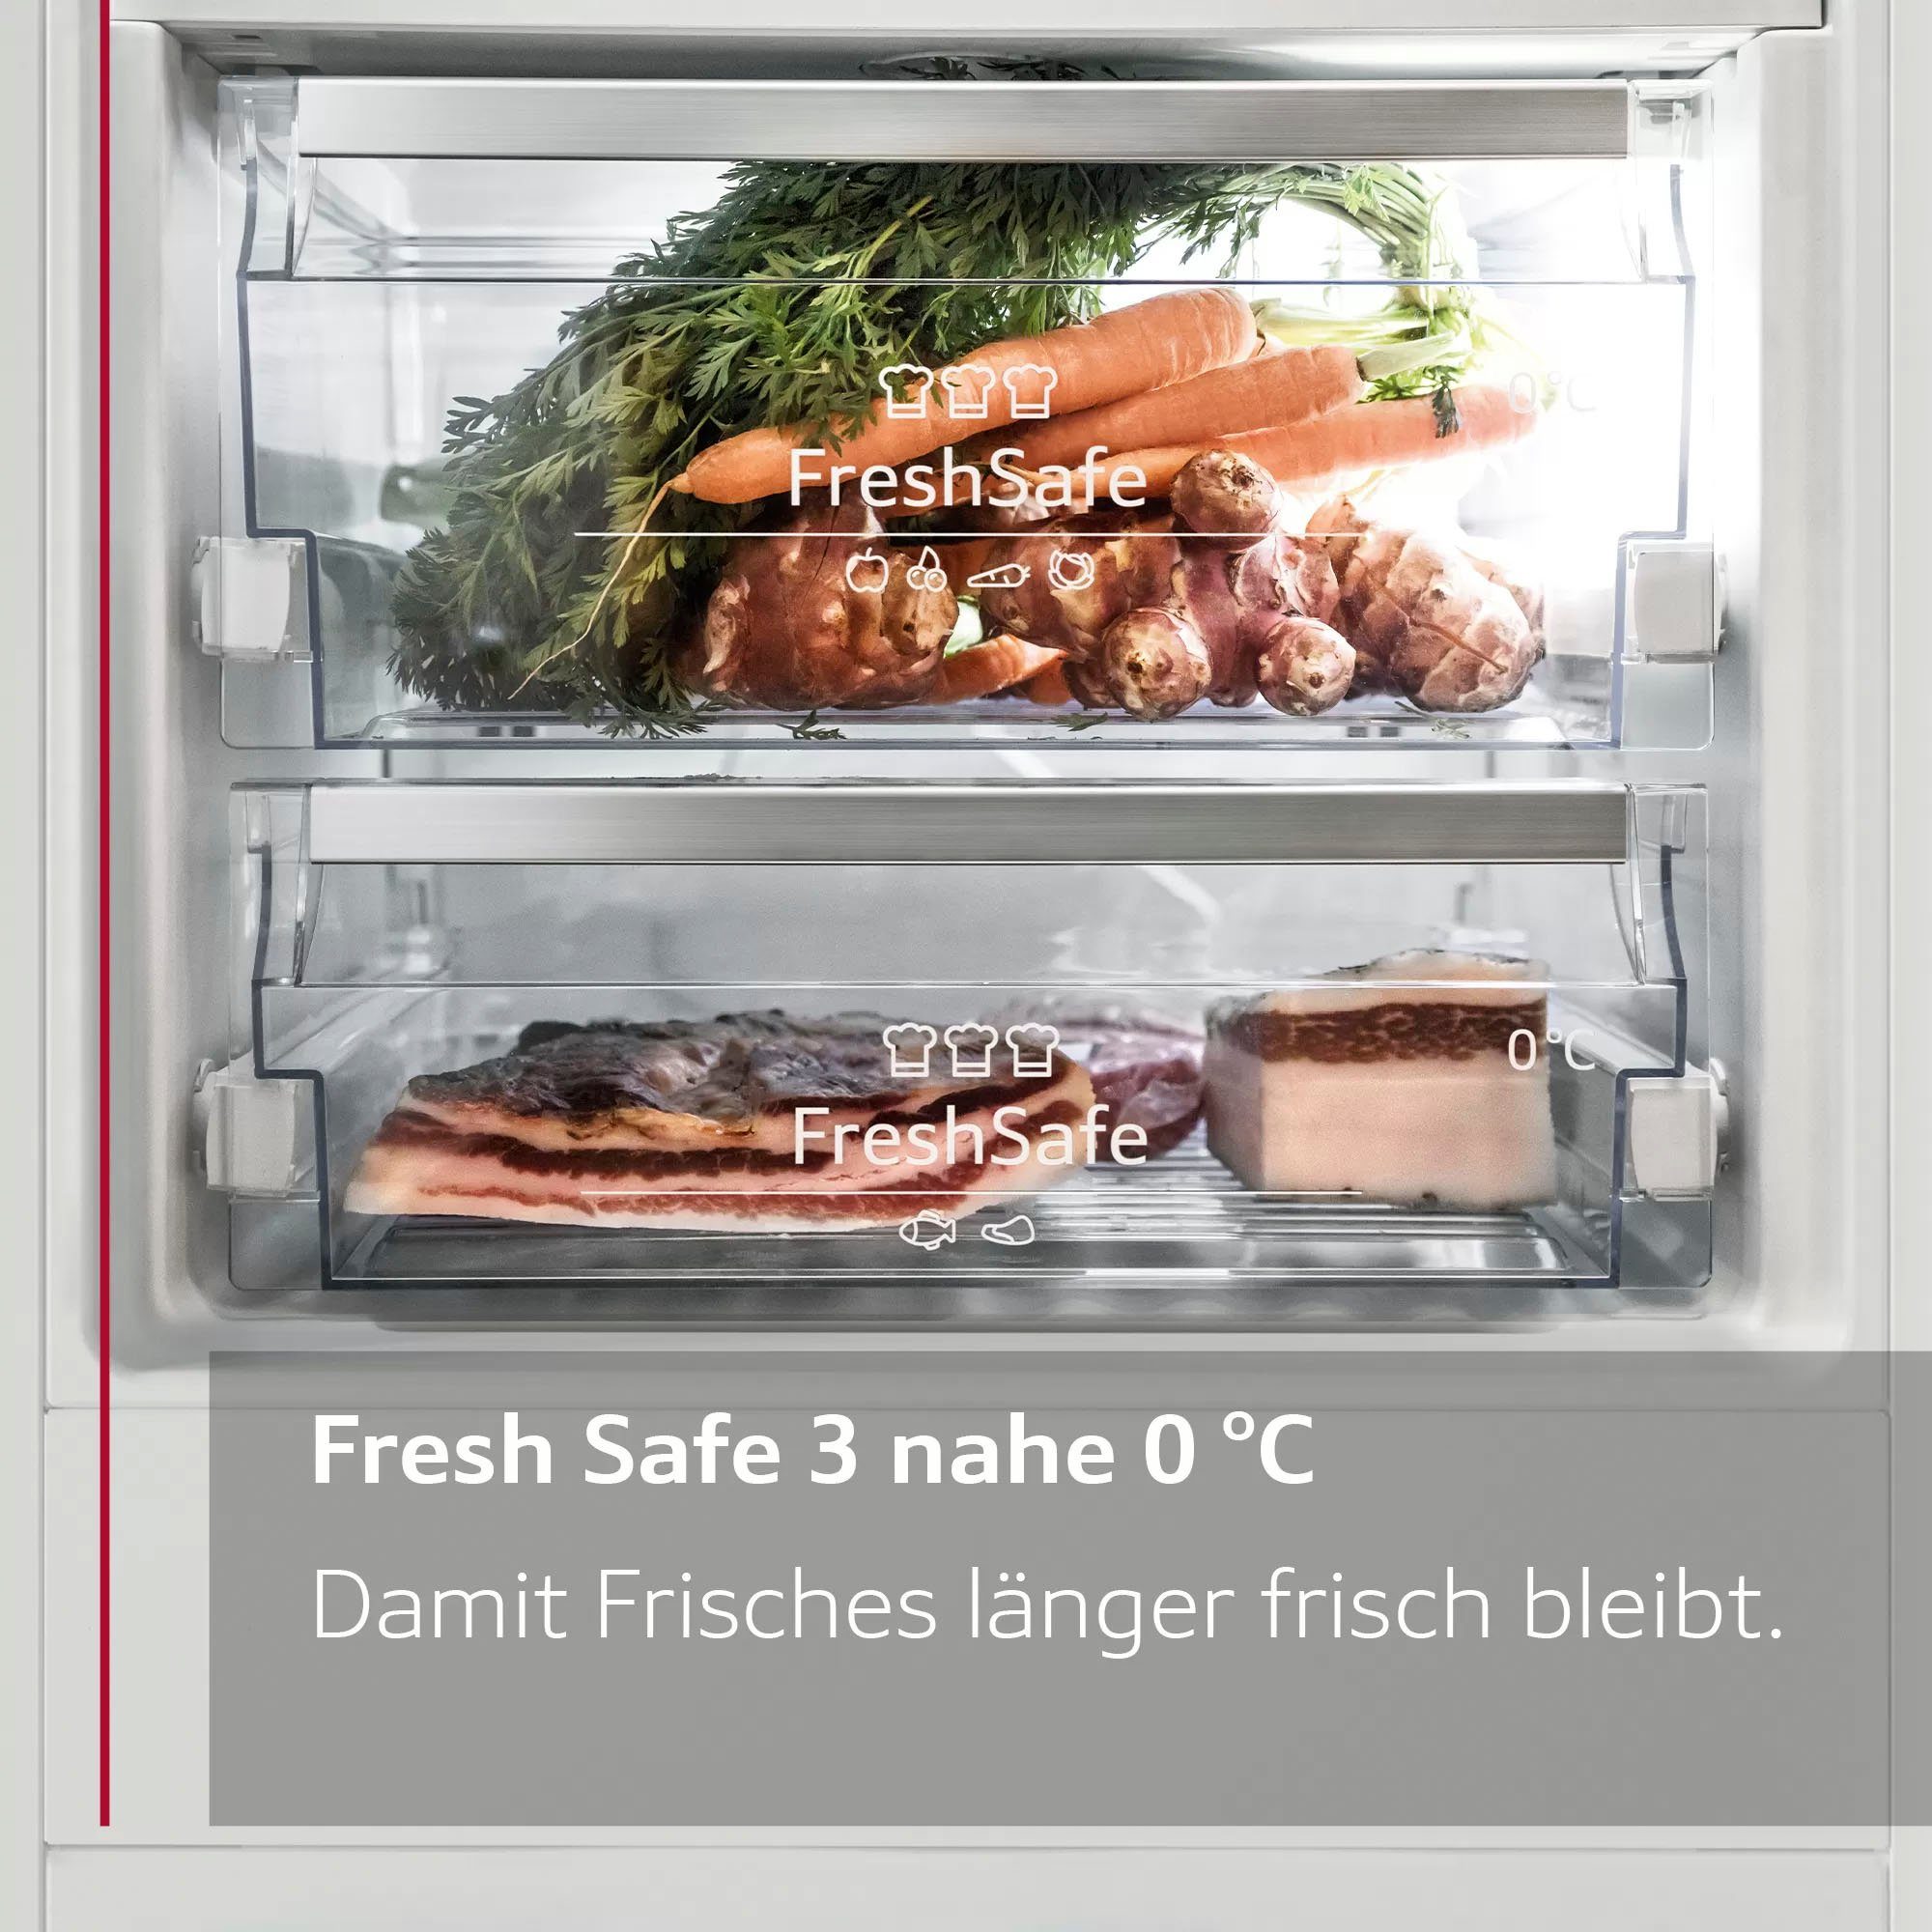 NEFF Einbaukühlschrank N 90 KI8813FE0, 177,2 cm hoch, 56 cm breit,  Betriebsgeräusch: 37 dB